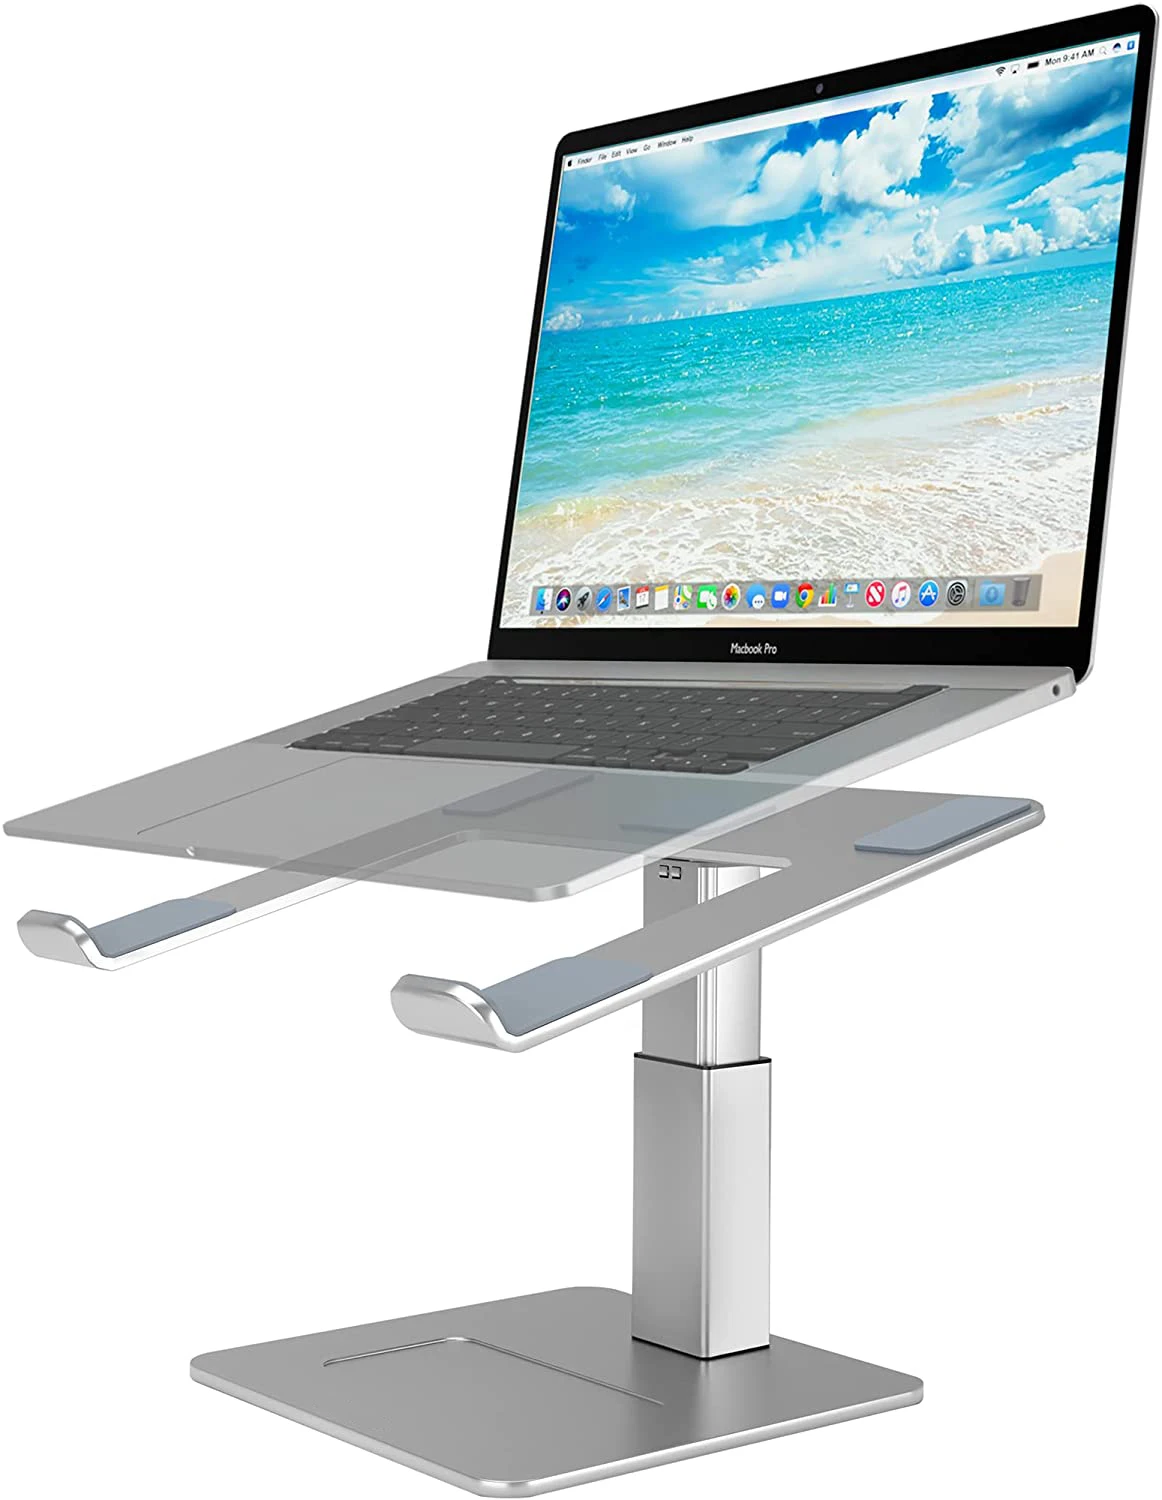 

Ergonimic Height Angle Adjustable Lapdesks Stable Ventilated Laptop Holder Stand For Desk